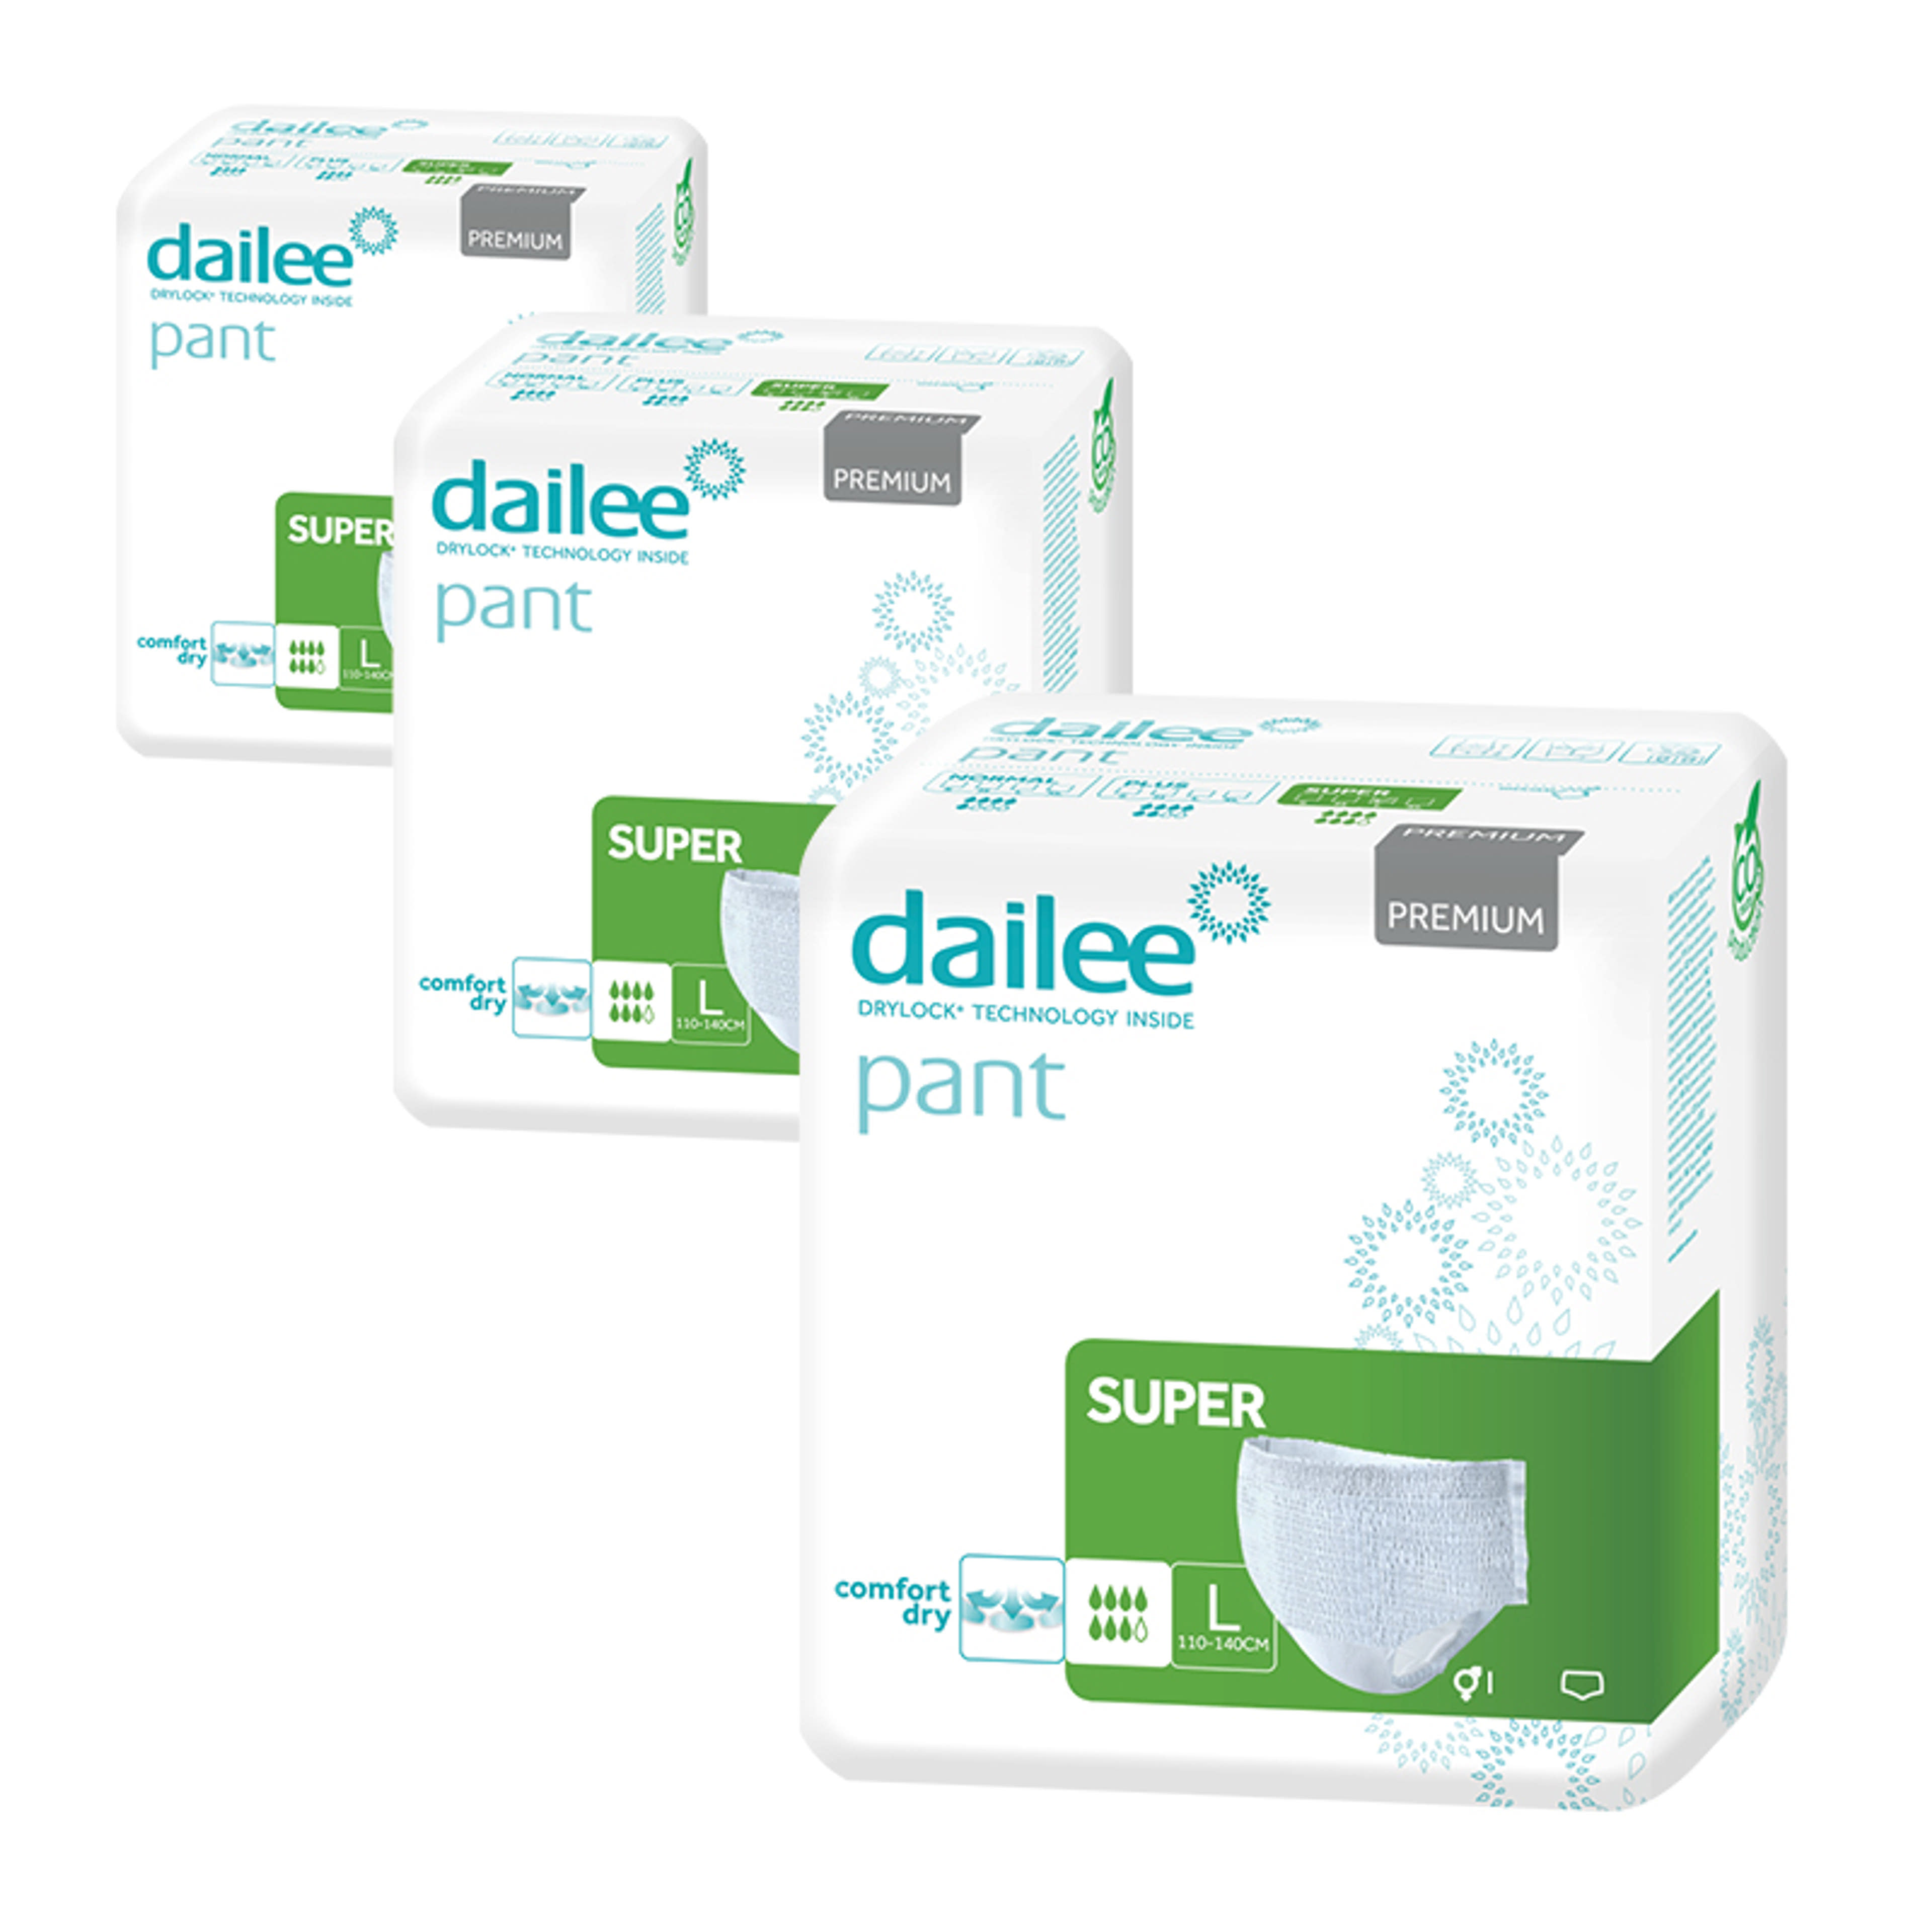 Dailee Pant Premium Super inkontinencia nadrág L-es méret - 3 db-os csomag